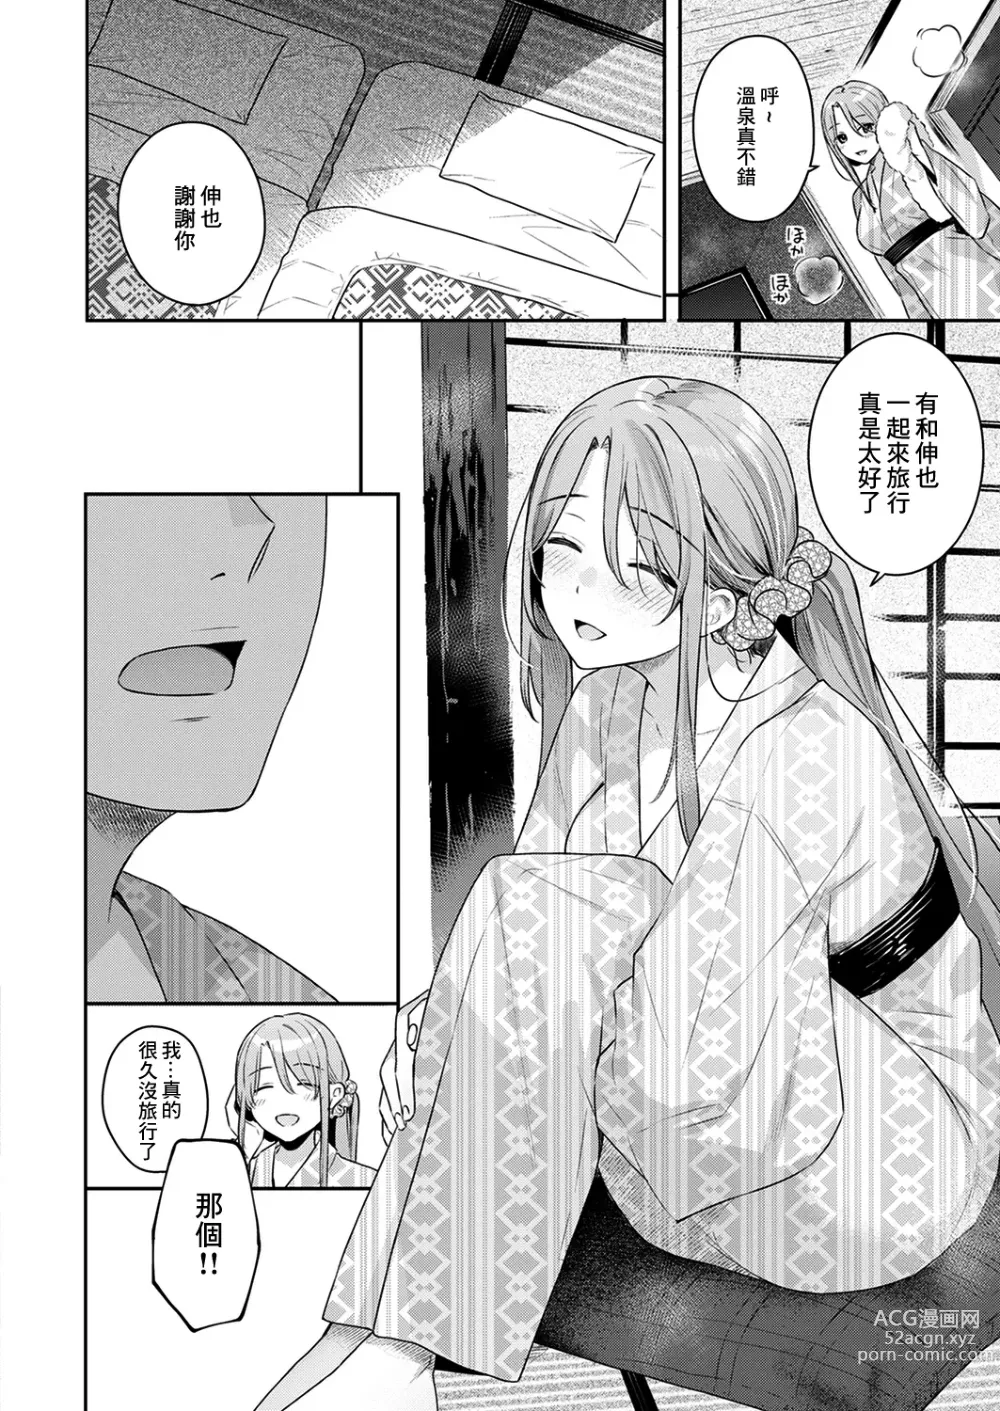 Page 12 of manga Otona no Issen Lesson 2